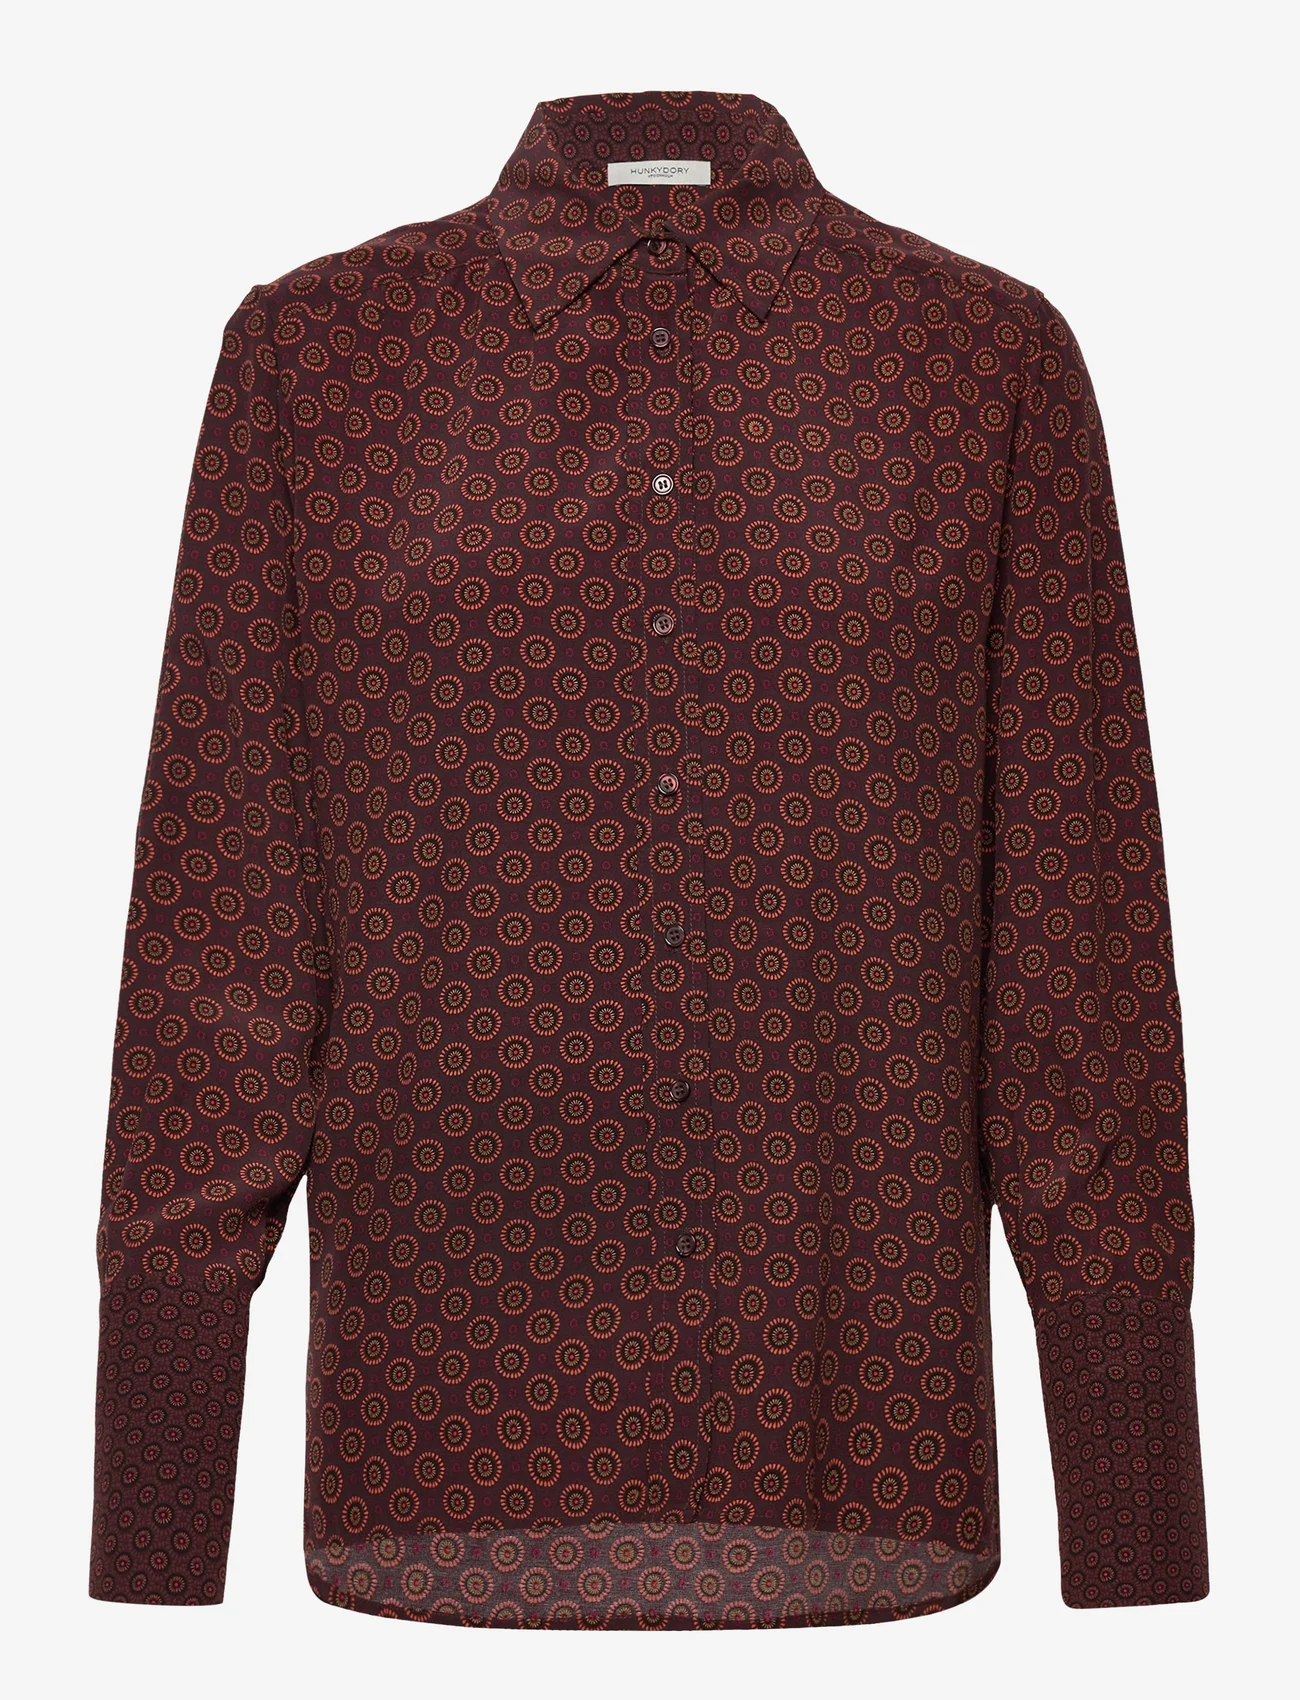 HUNKYDORY - Ellie Shirt - overhemden met lange mouwen - chocolate brown aop - 0